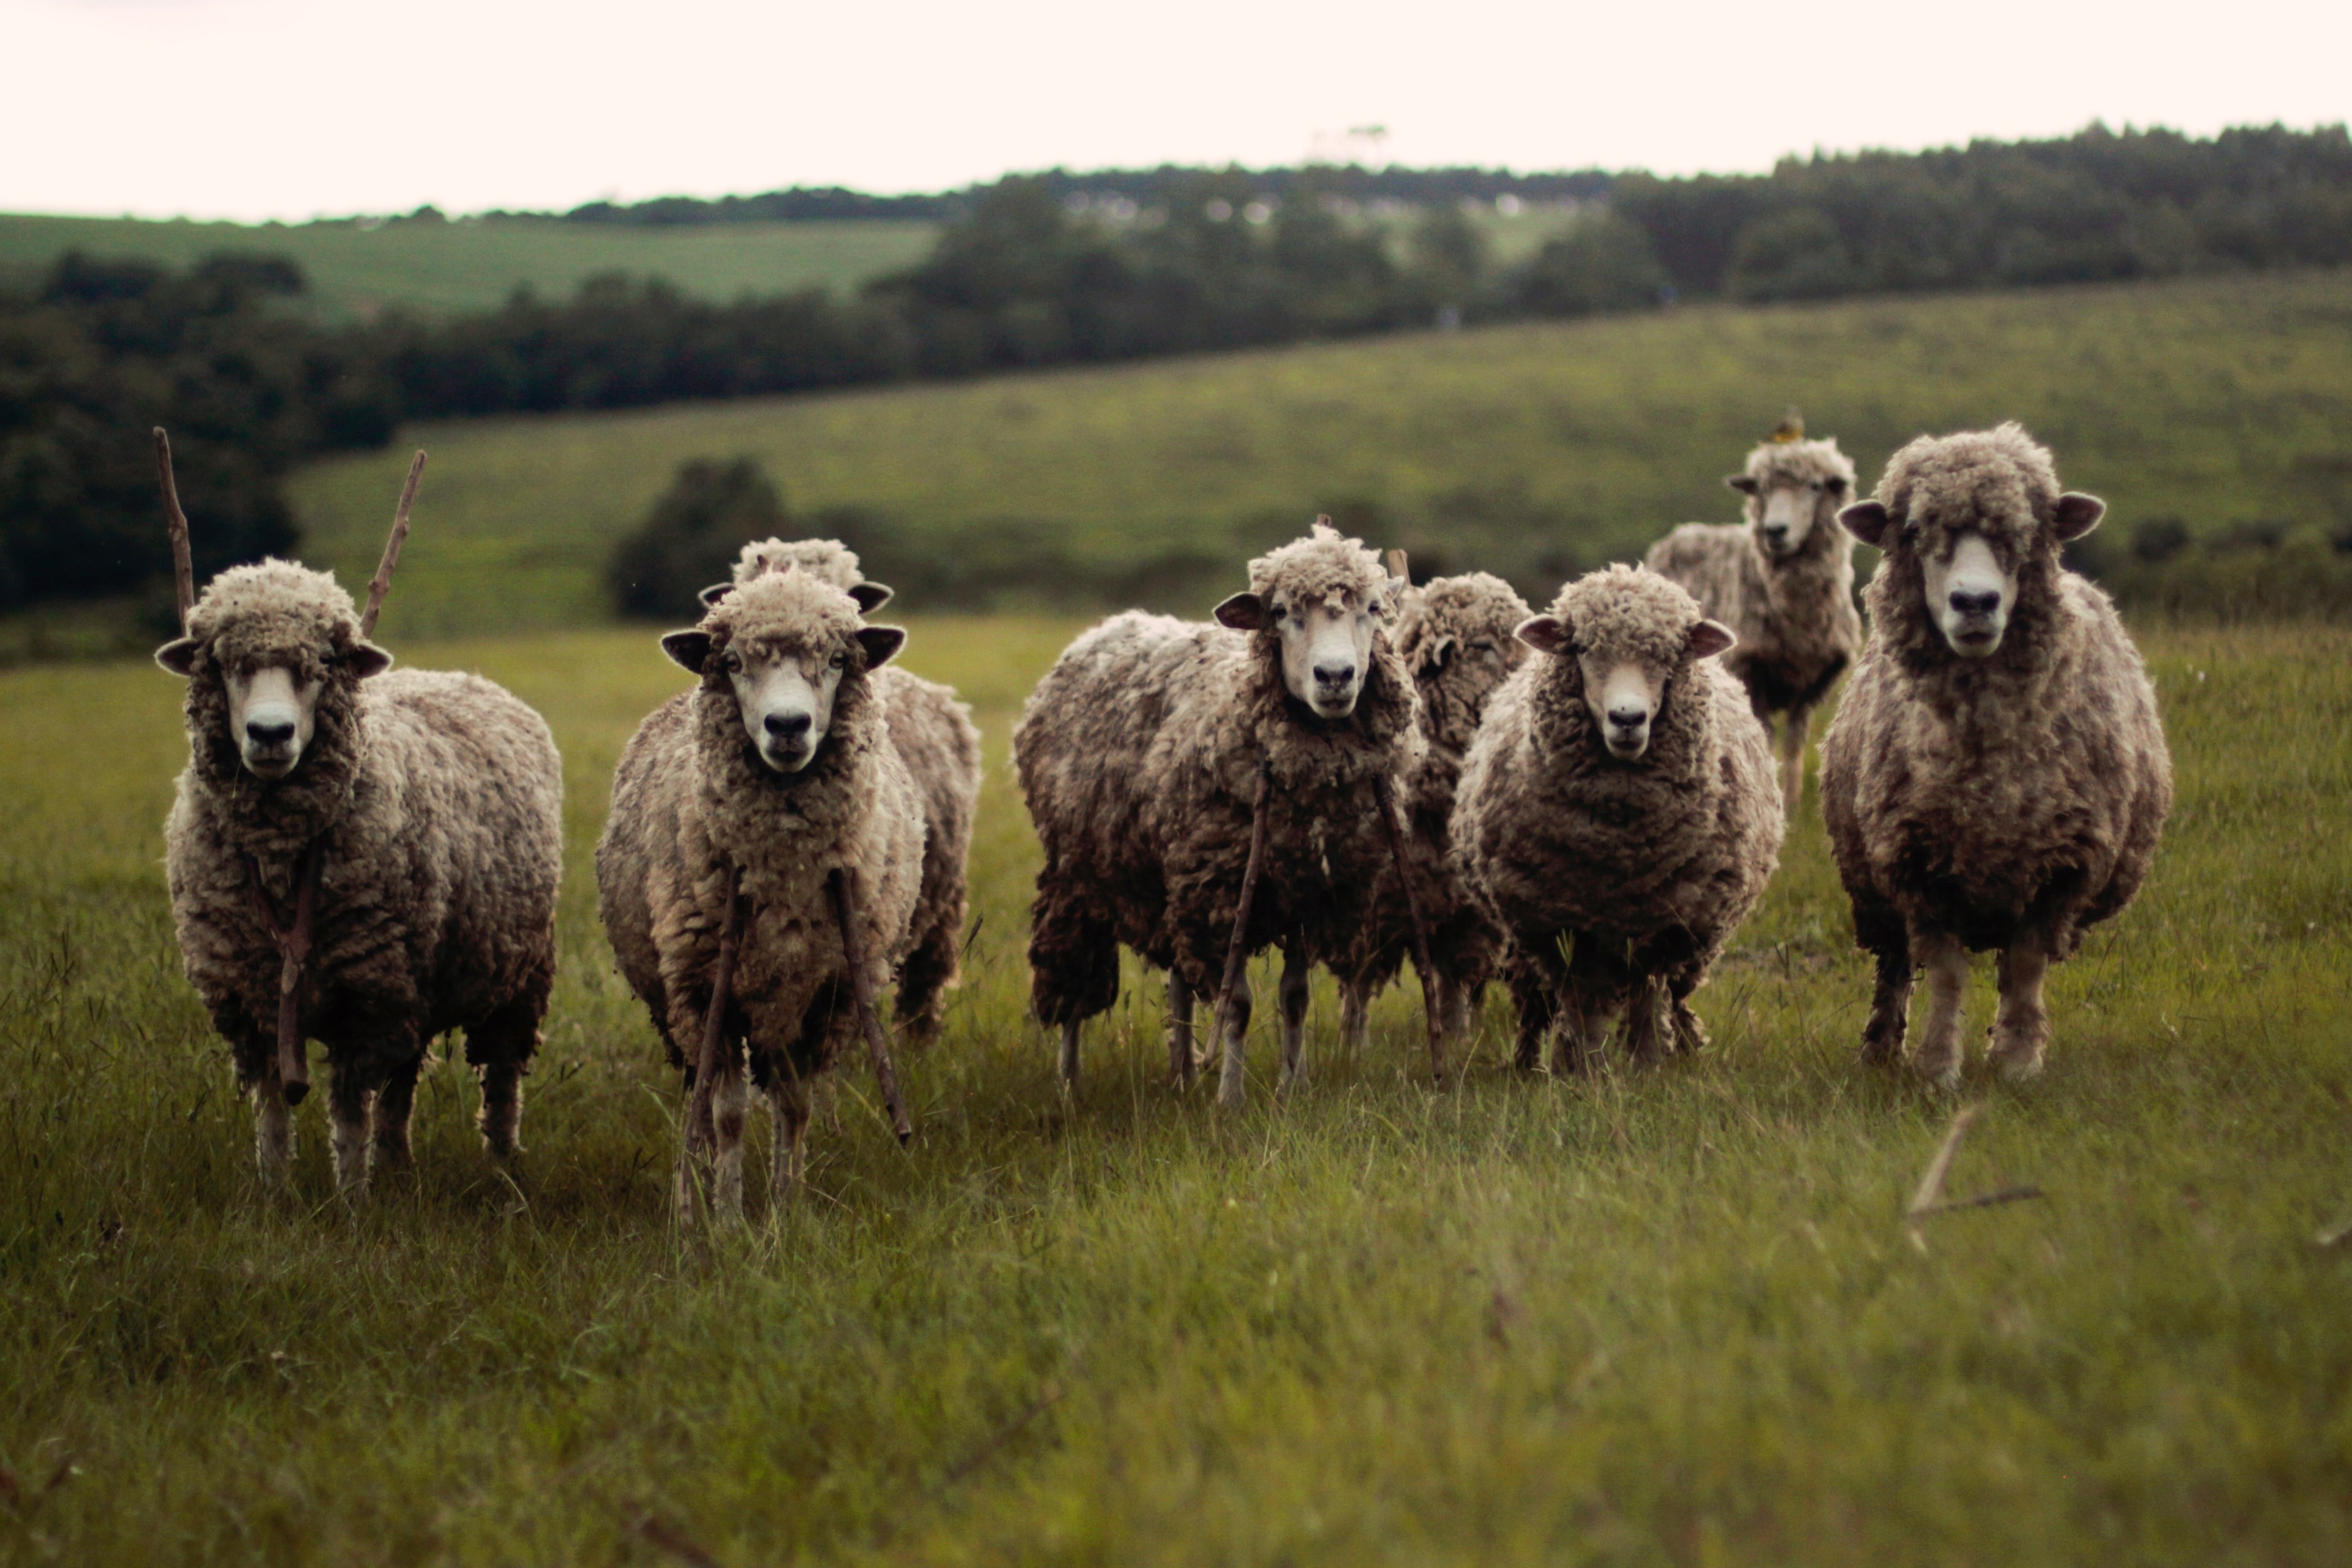 Wallpaper / sheep standing in a grassy field, sheep in field 4k wallpaper free download